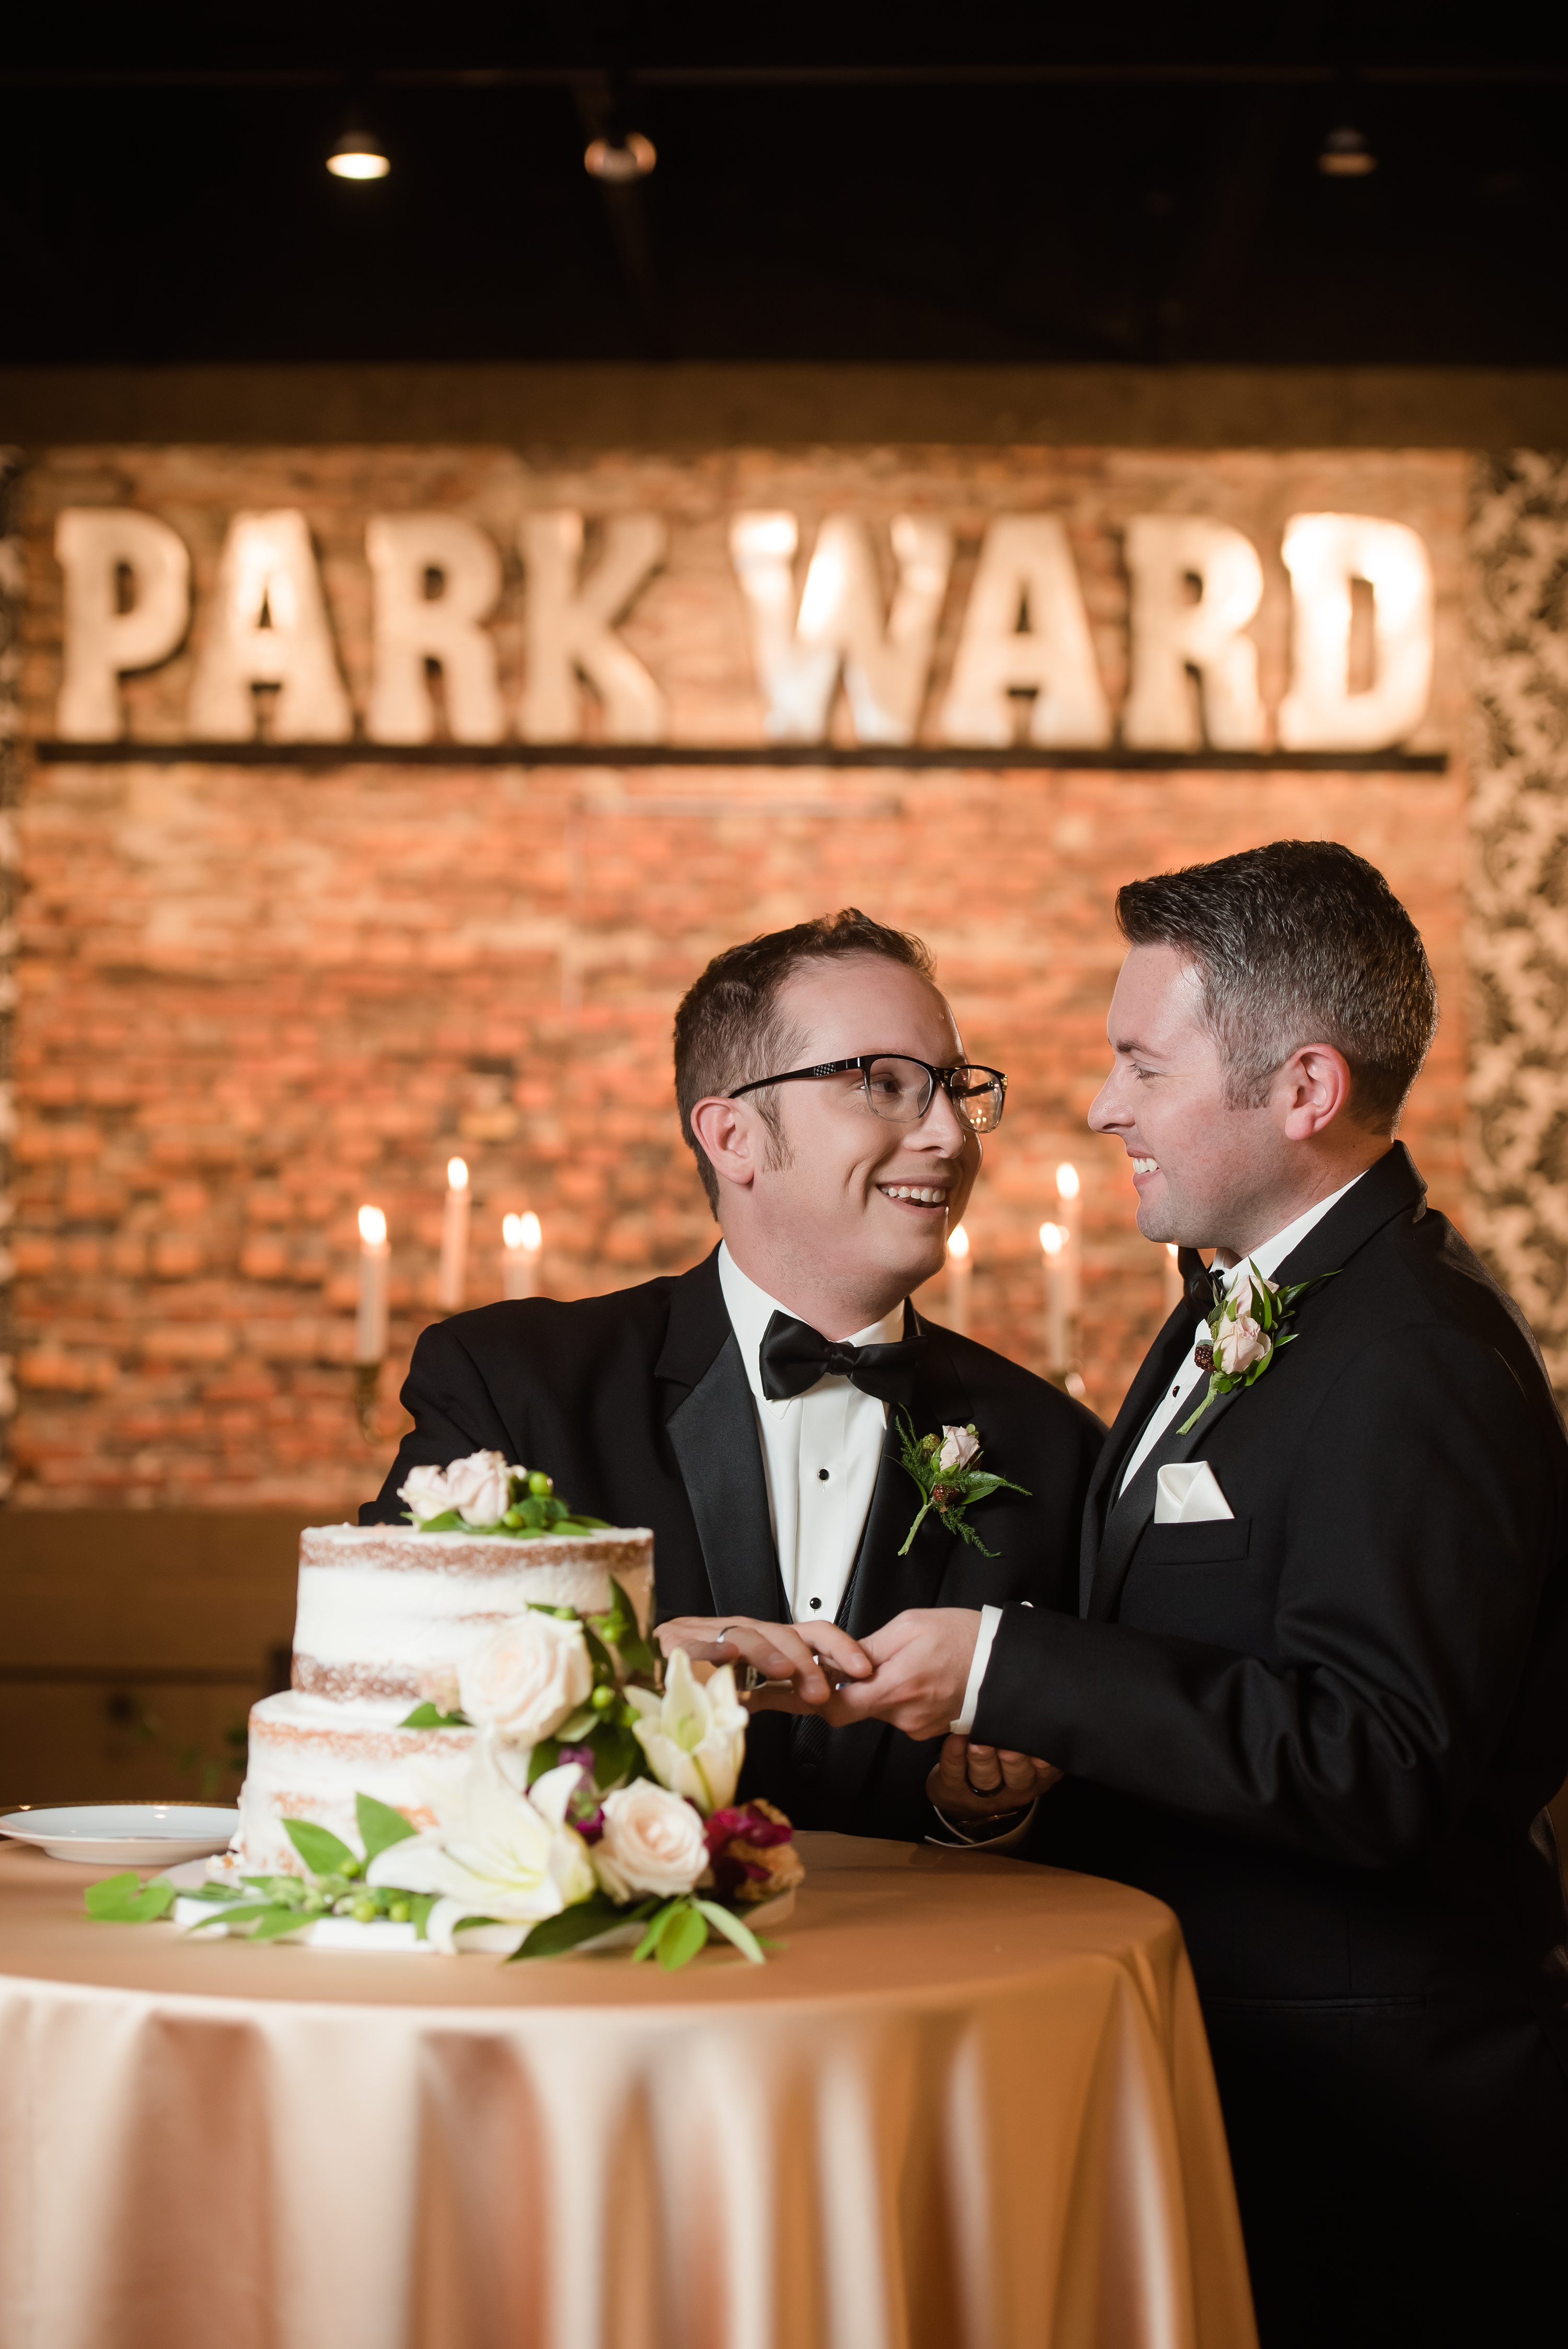 park ward events,Rolls Royce Wedding